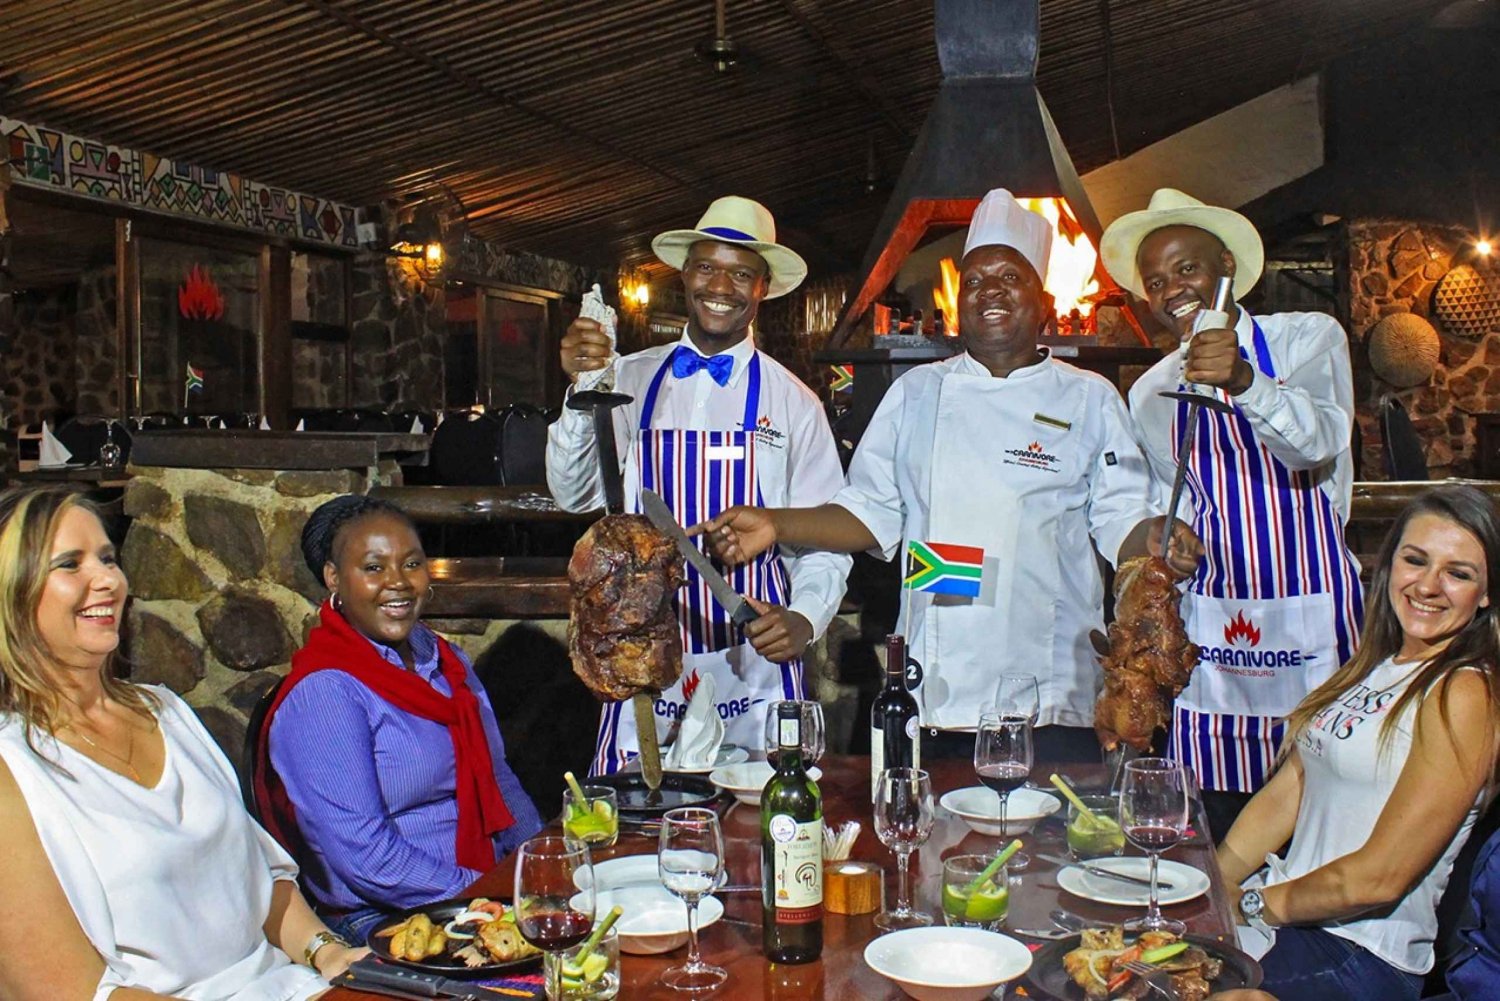 Carnivore Restaurant: Lunch or Dinner Experience in Nairobi